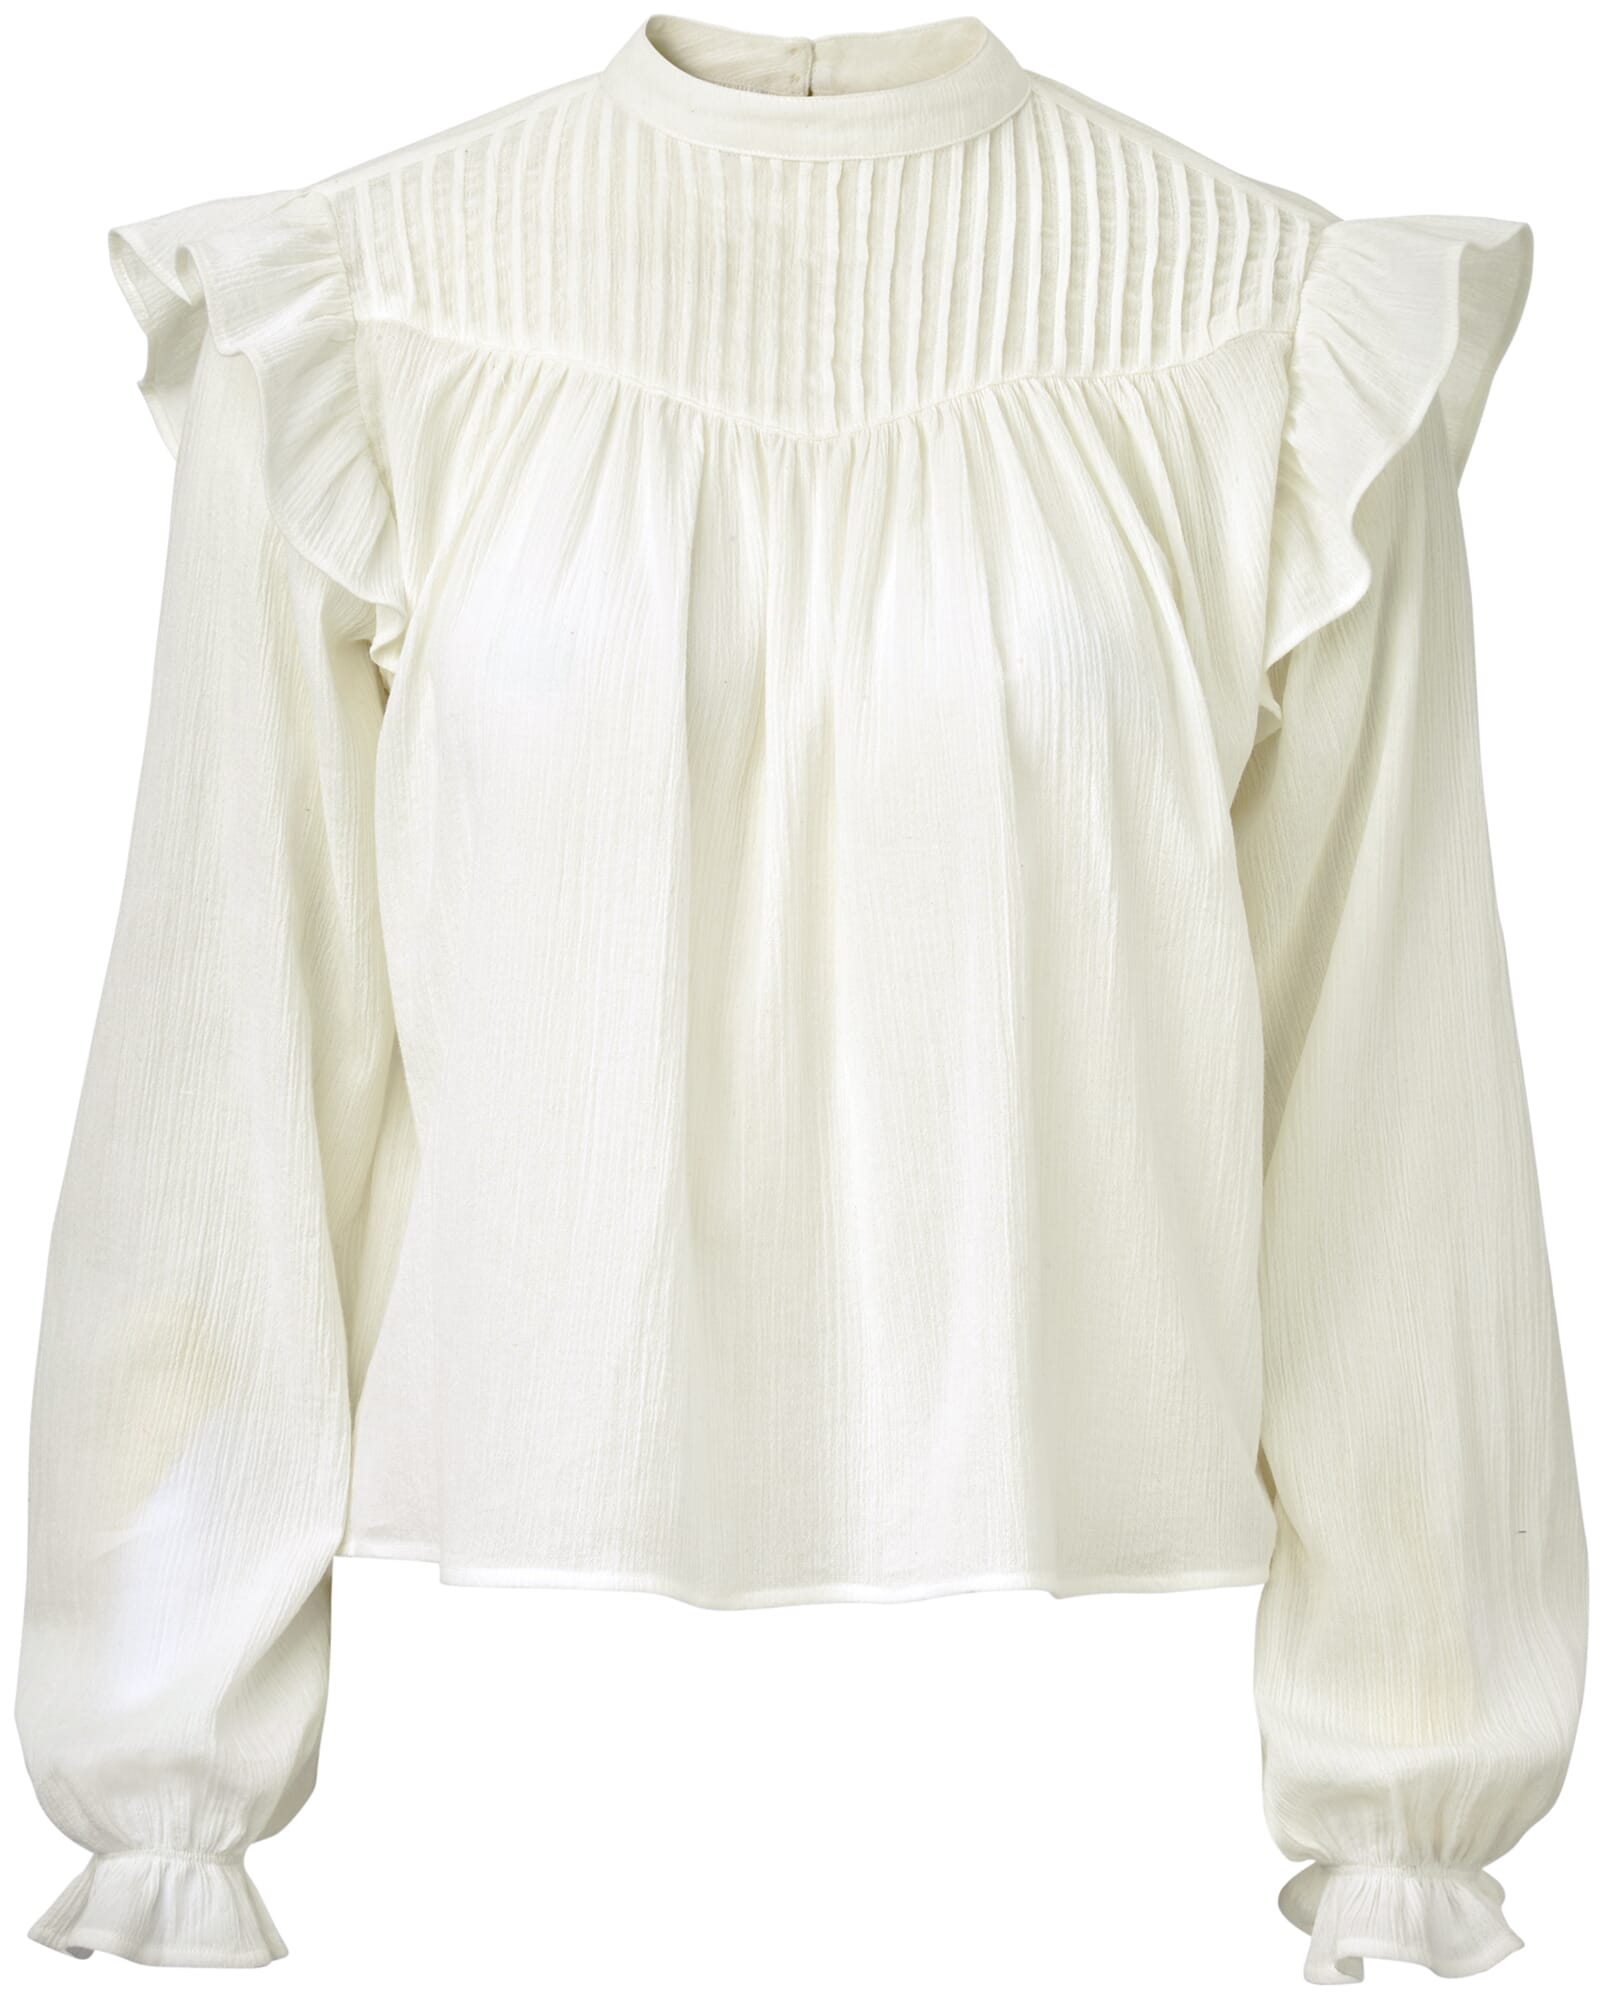 Ladies’ blouse ruffles, White